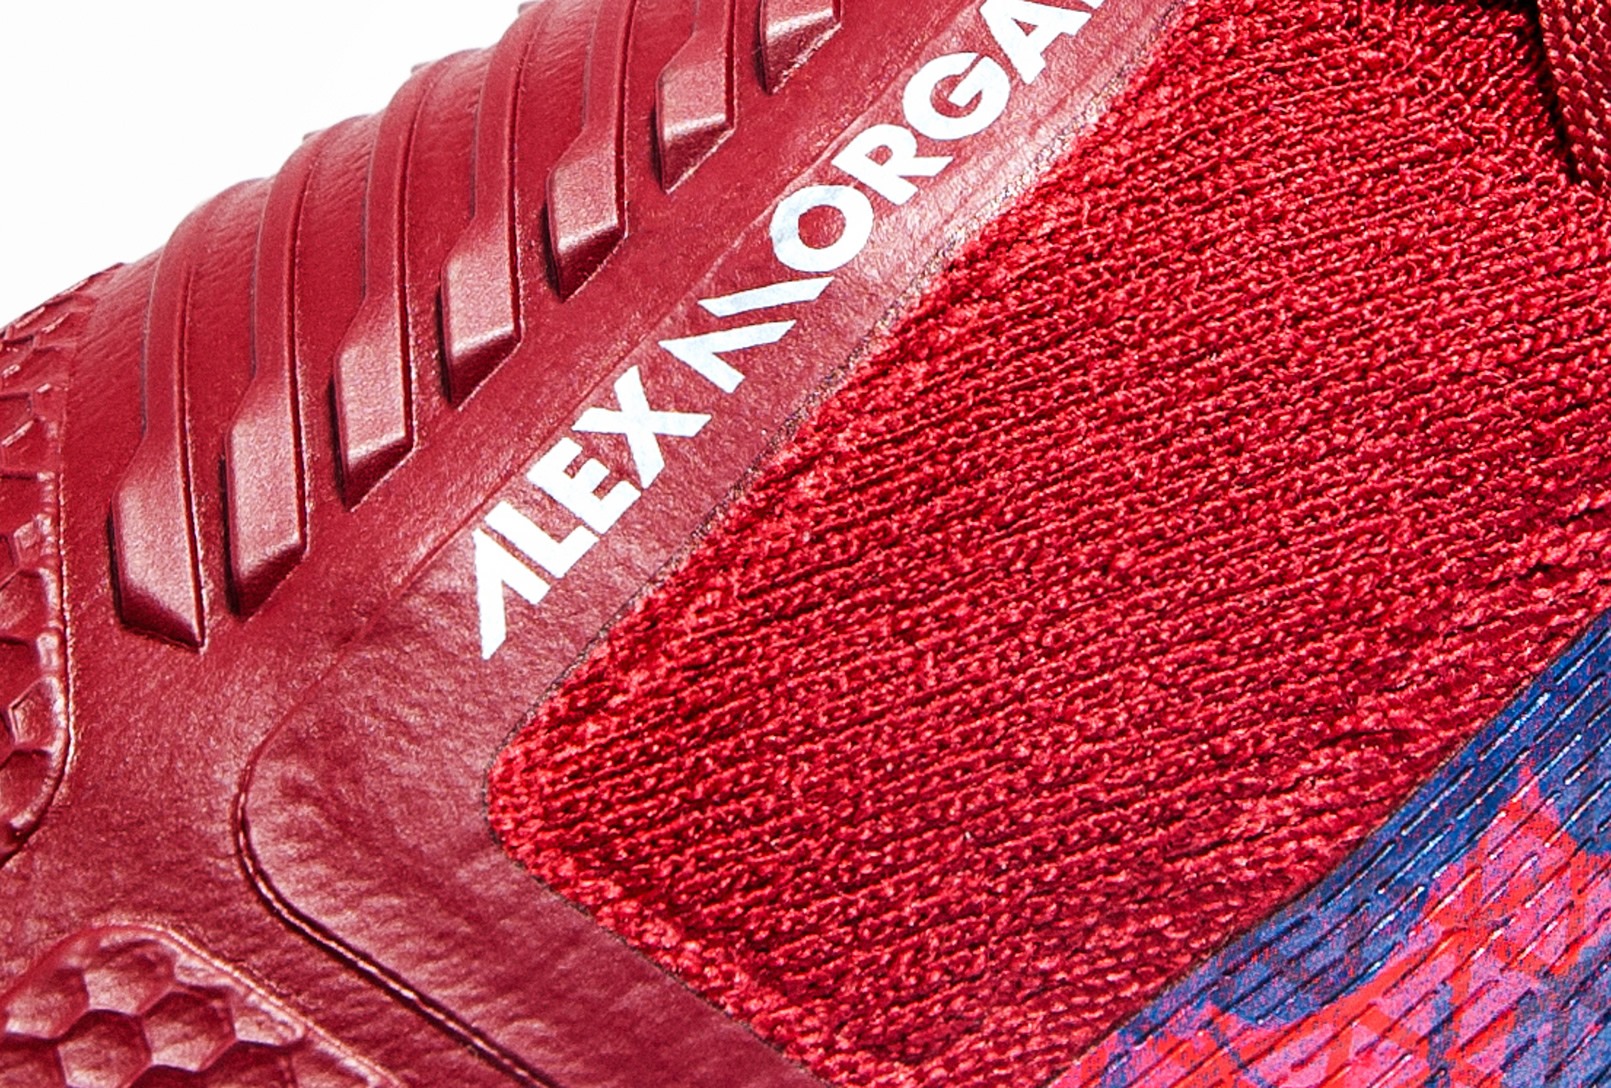 Botines Edición Especial PhantomVNM de Alex Morgan 100 Goles | Imagen Nike